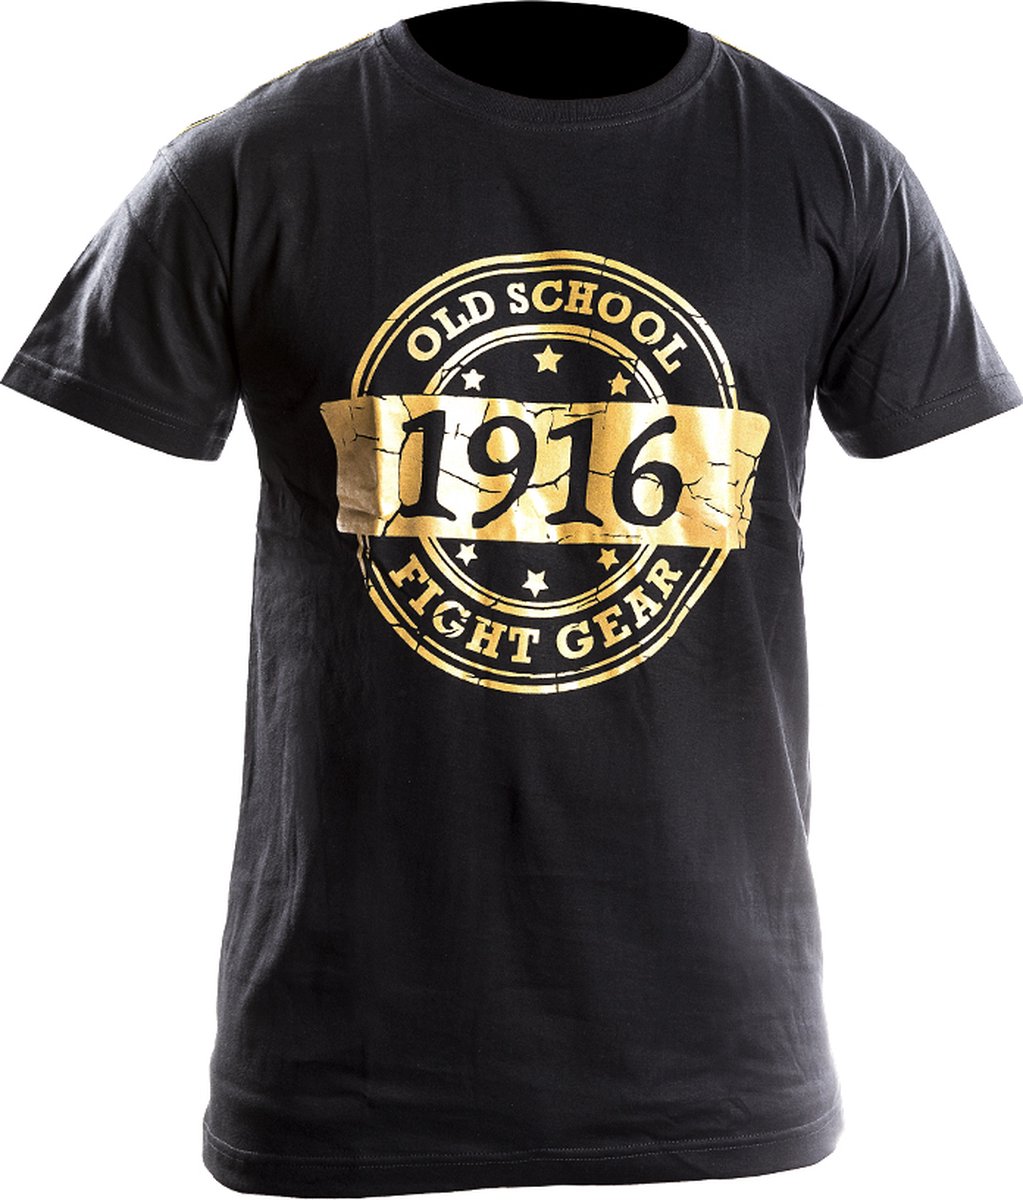 1916 Old School Shirt Zwart/Goud